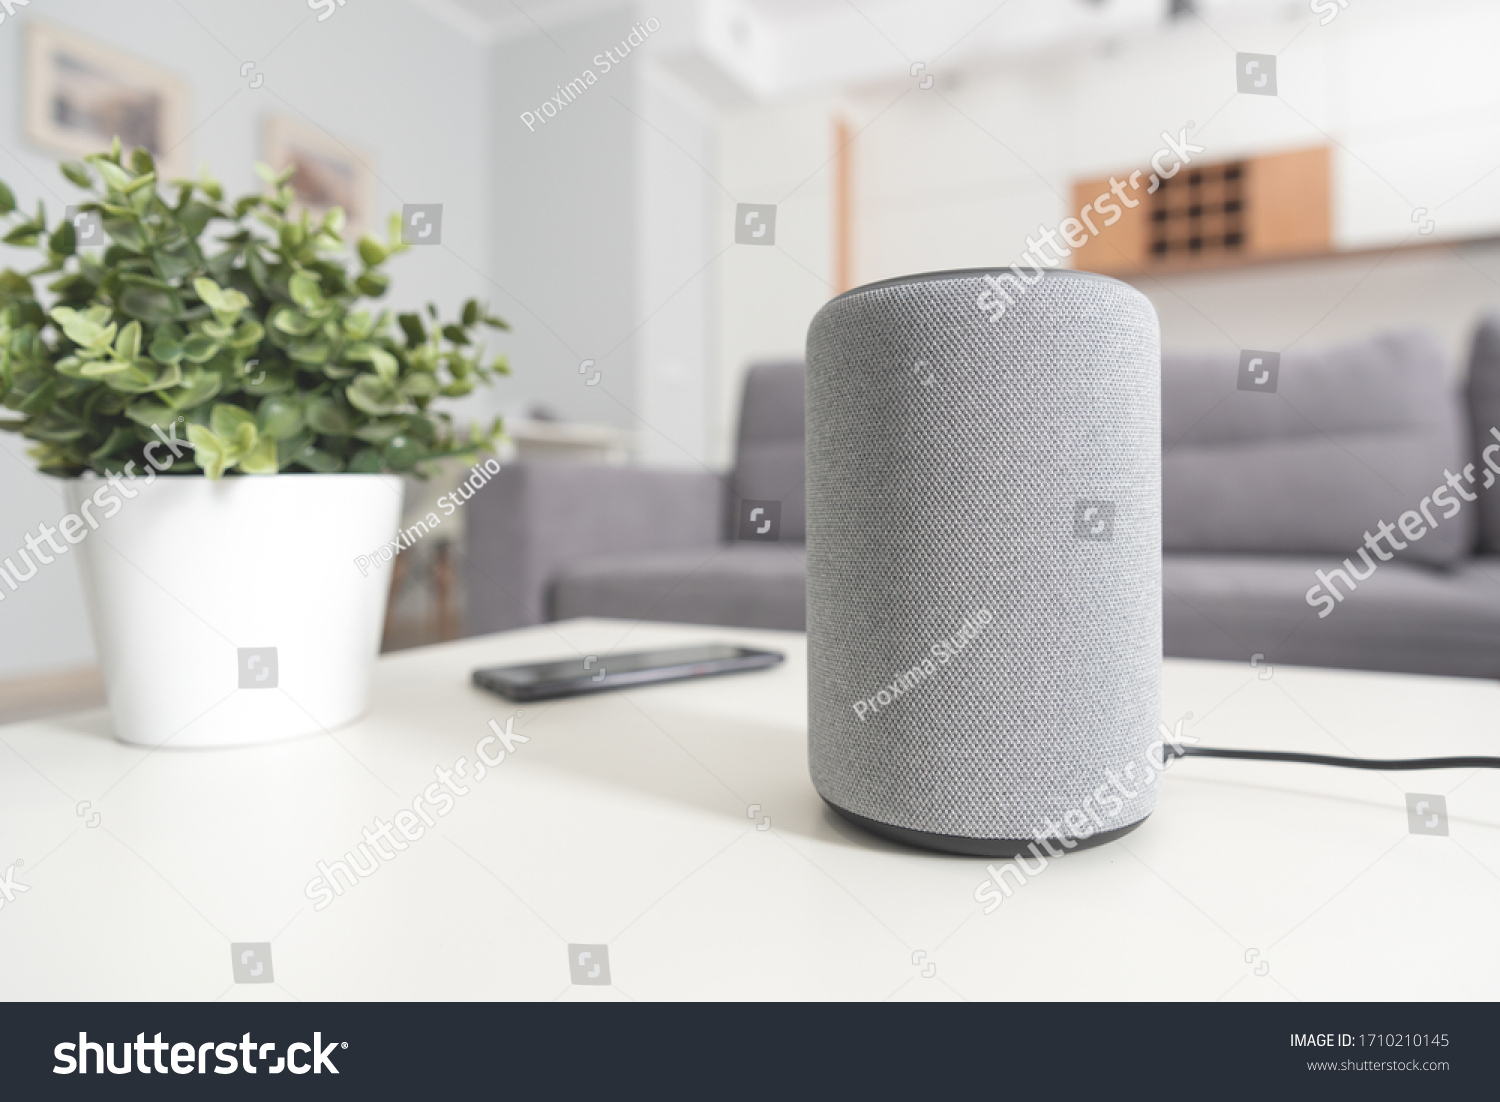 Smart speaker device in living room. Intelligent assistant in smart home system. #1710210145